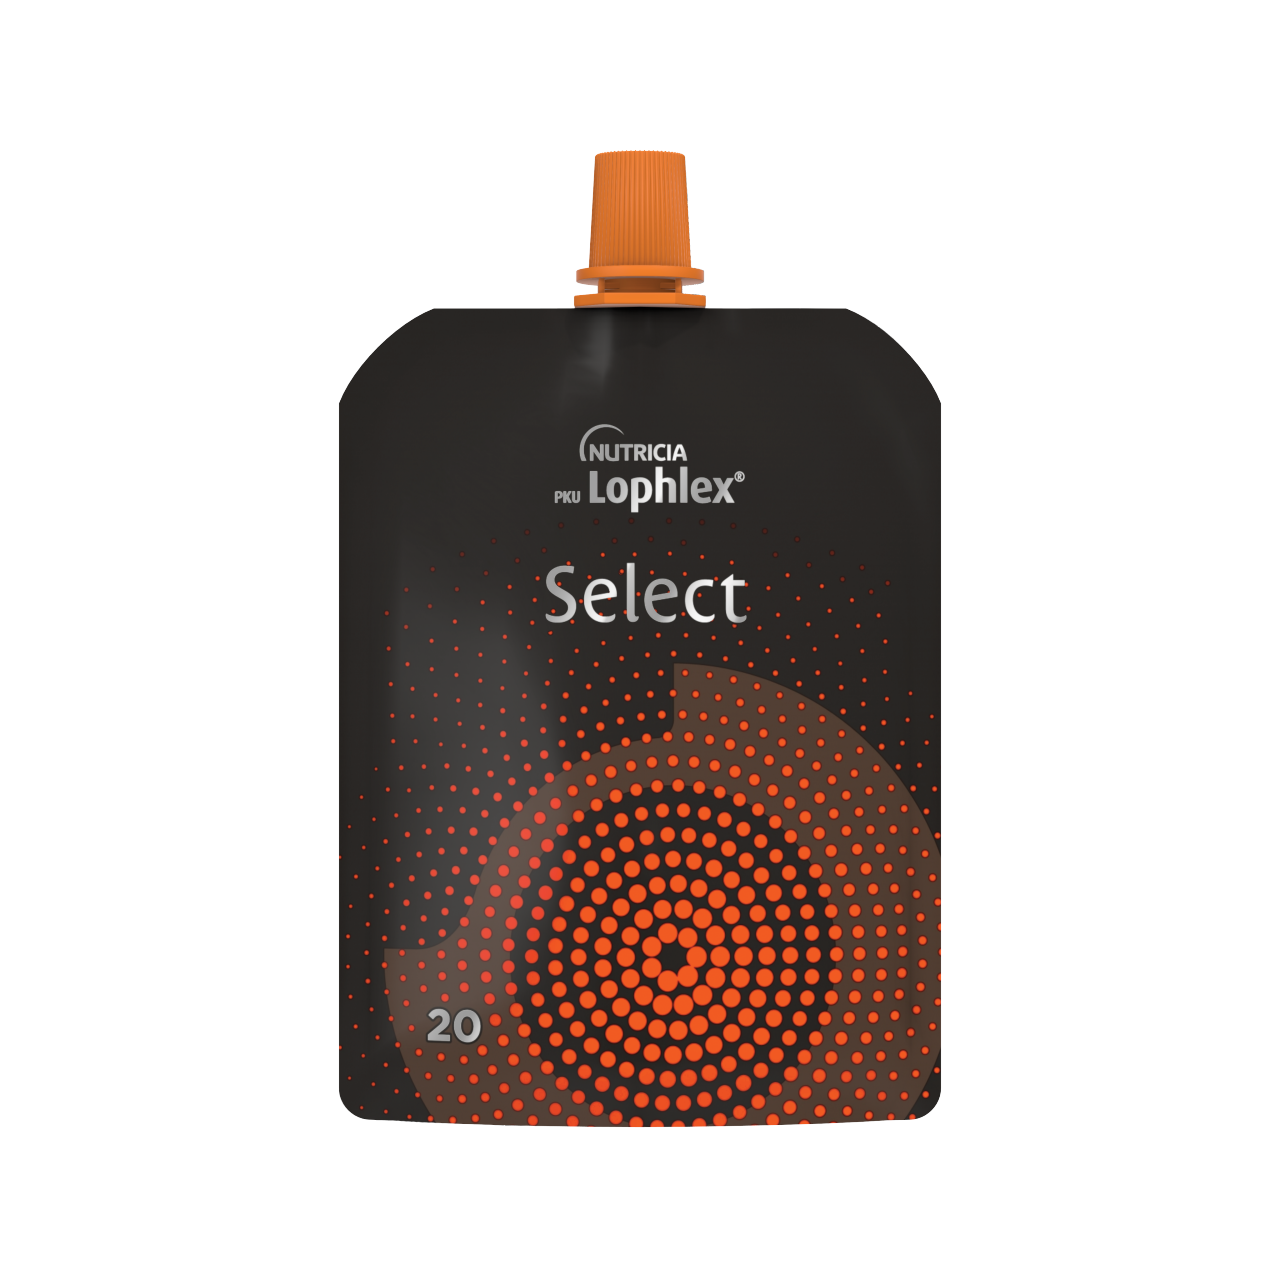 PKU-Lophlex-Select-20-packshot